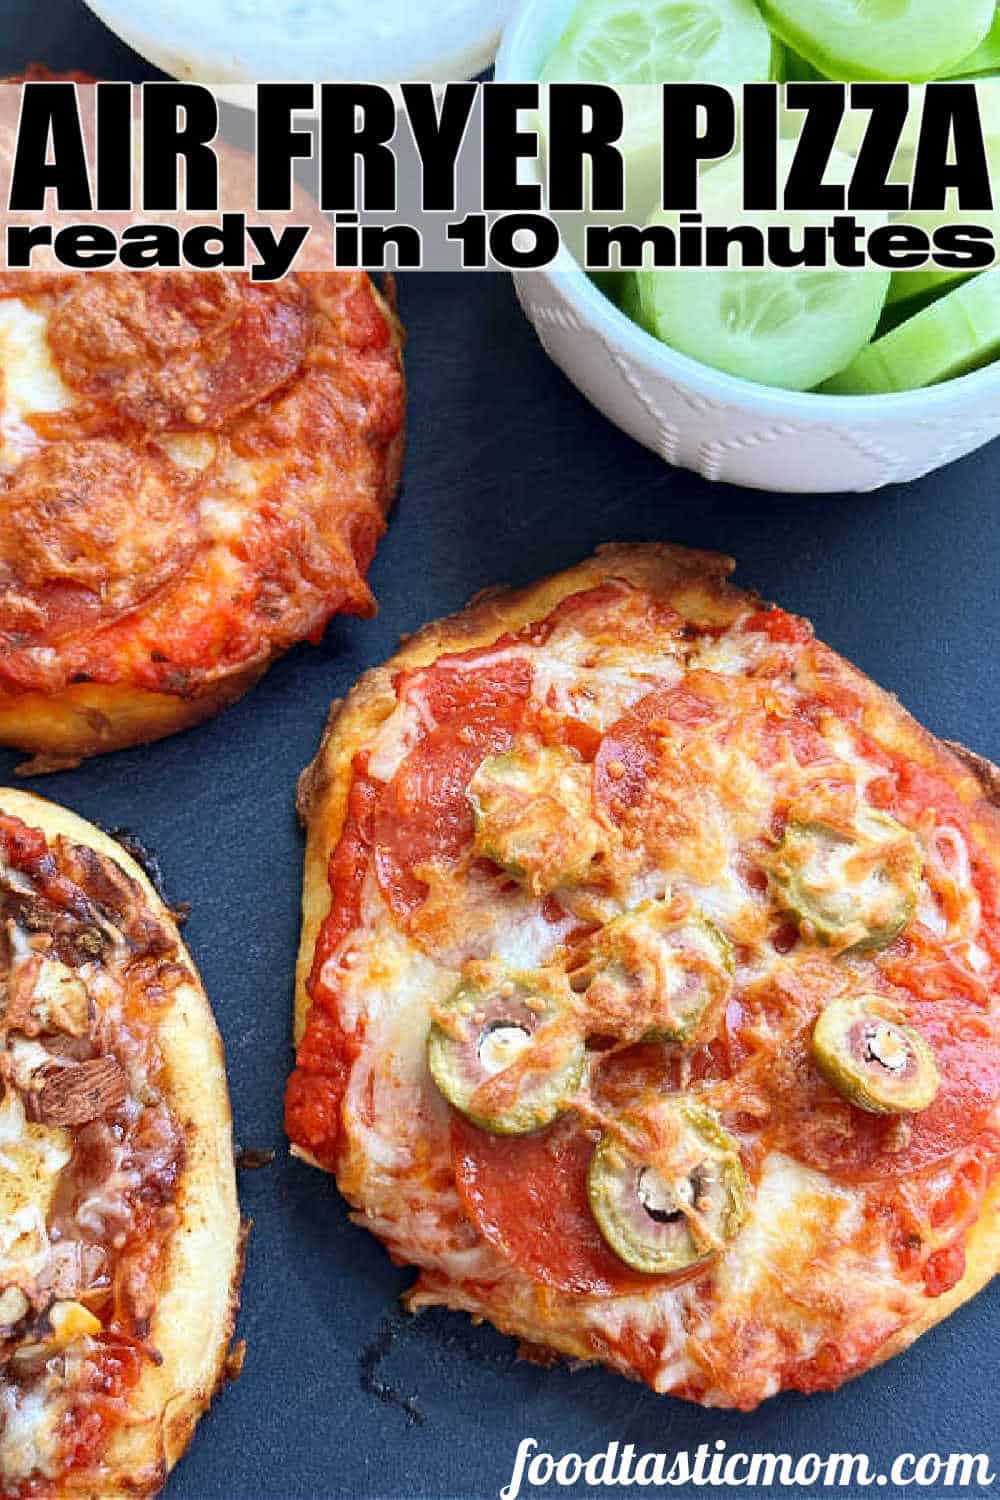 Air Fryer Pizza | Foodtastic Mom #airfryerrecipes #airfryerpizza #pizzarecipes via @foodtasticmom